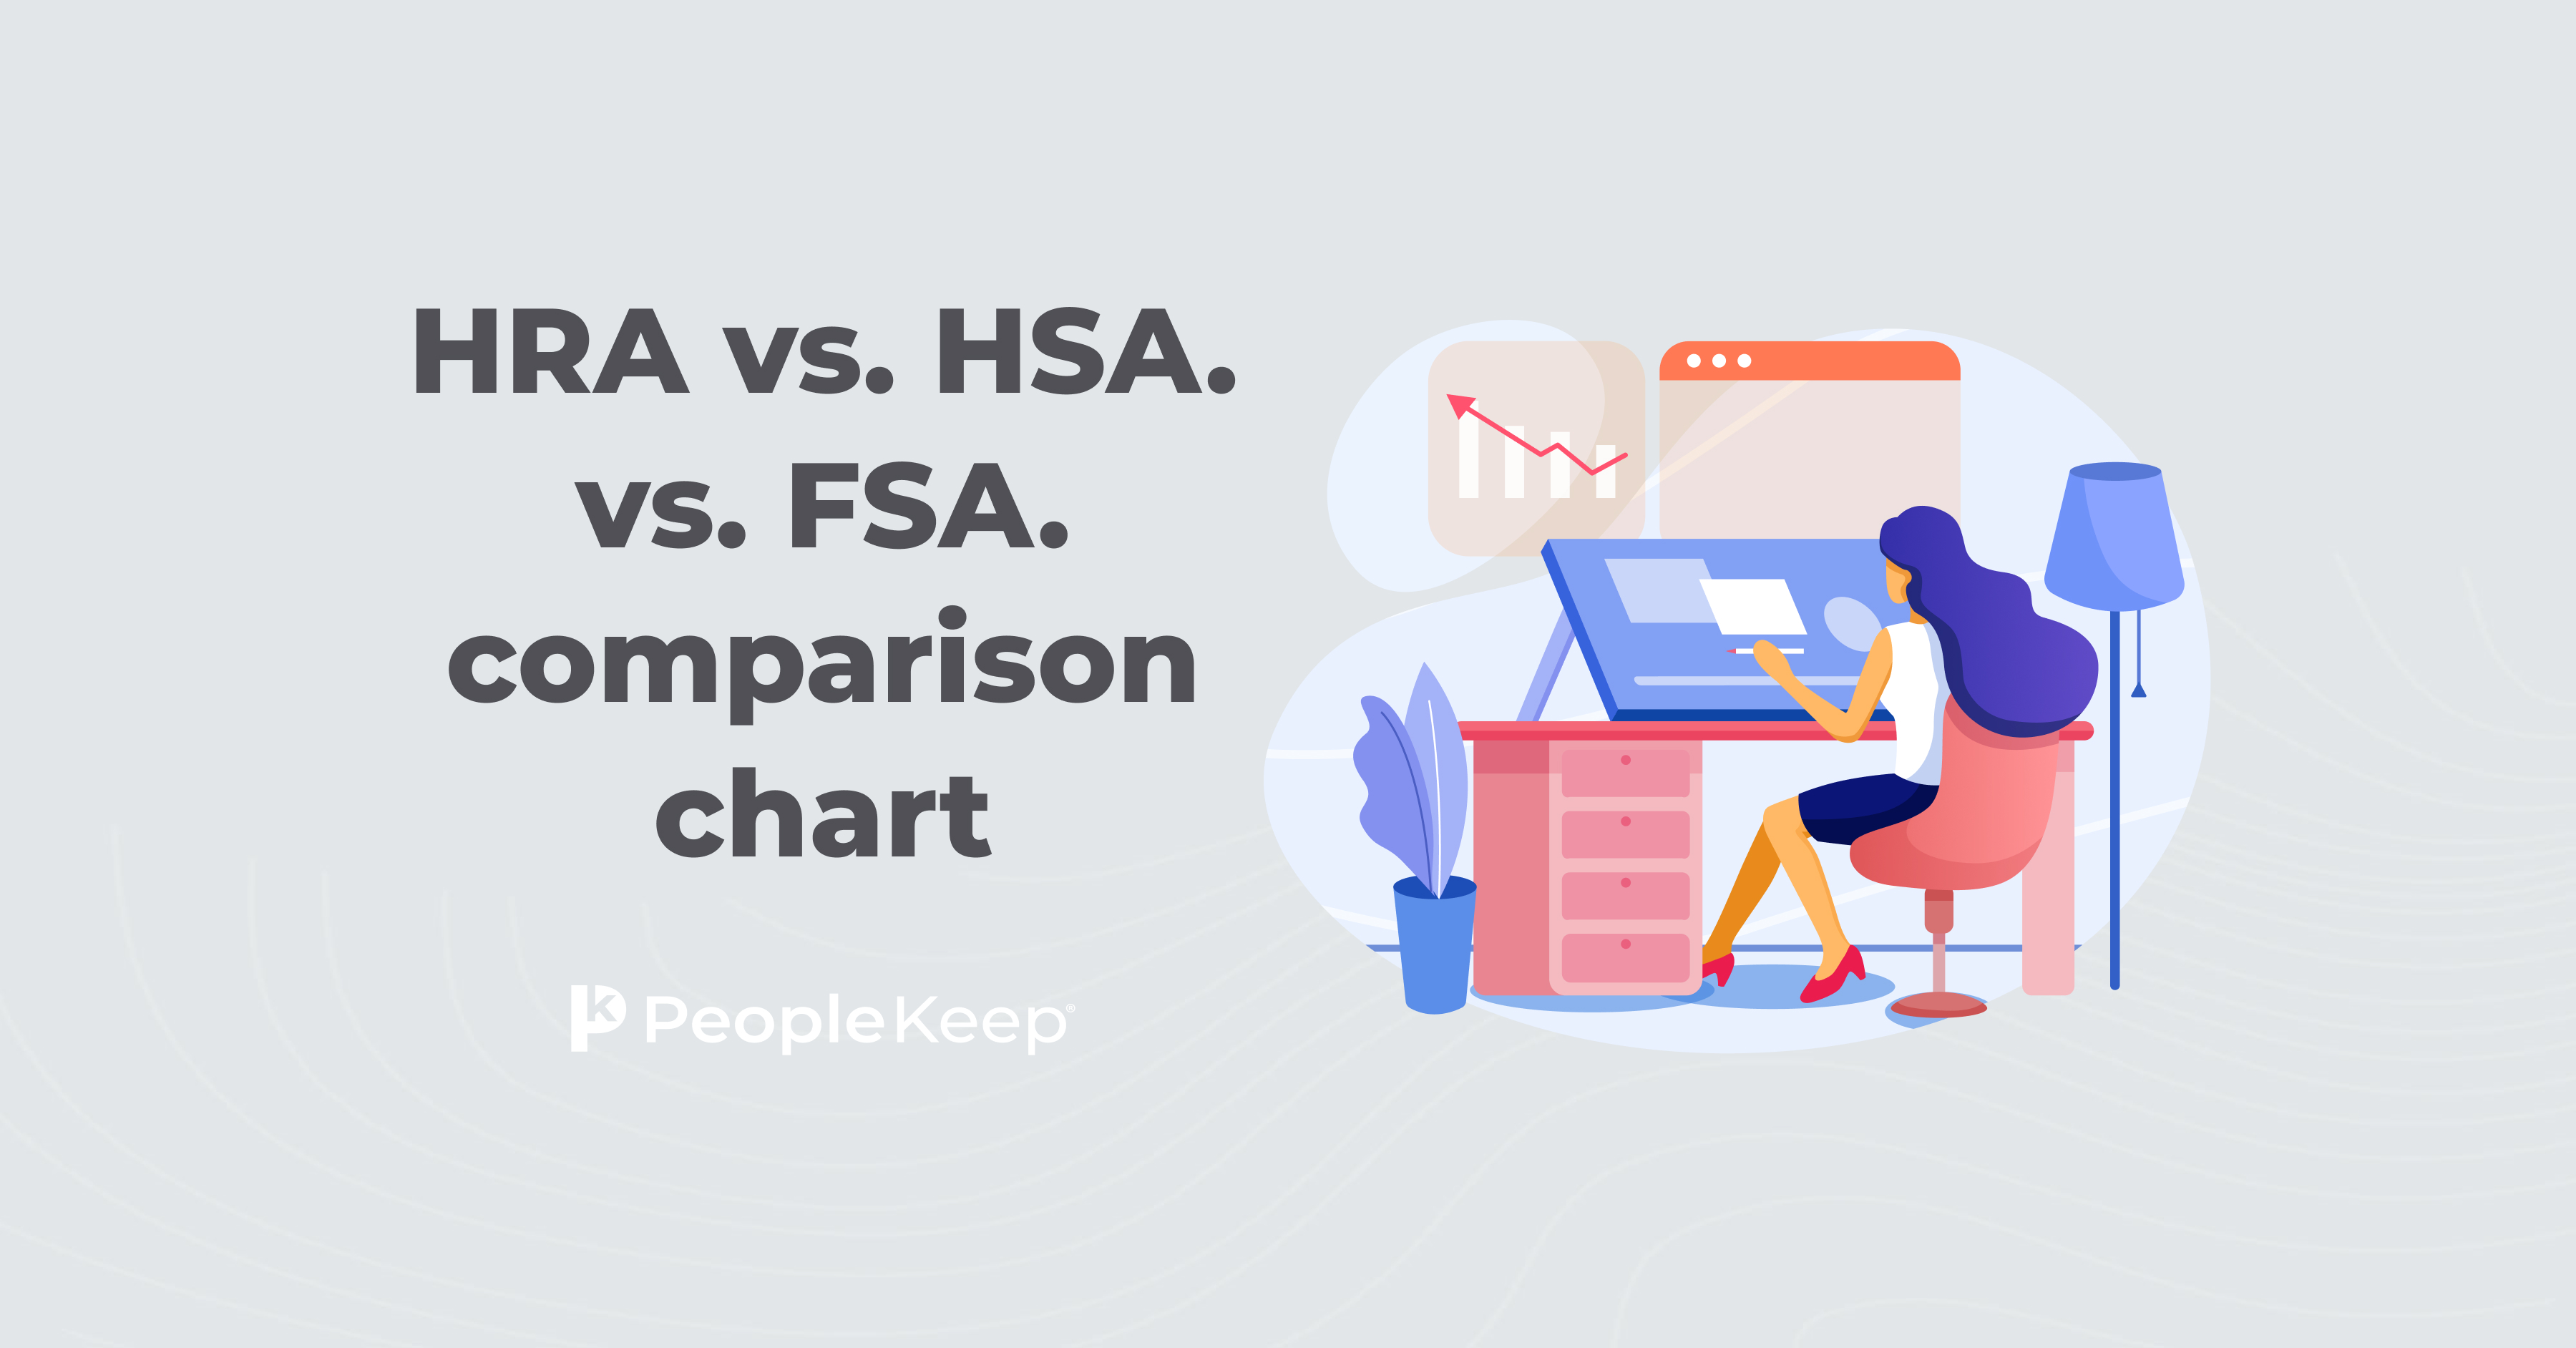 HSA/FSA Information